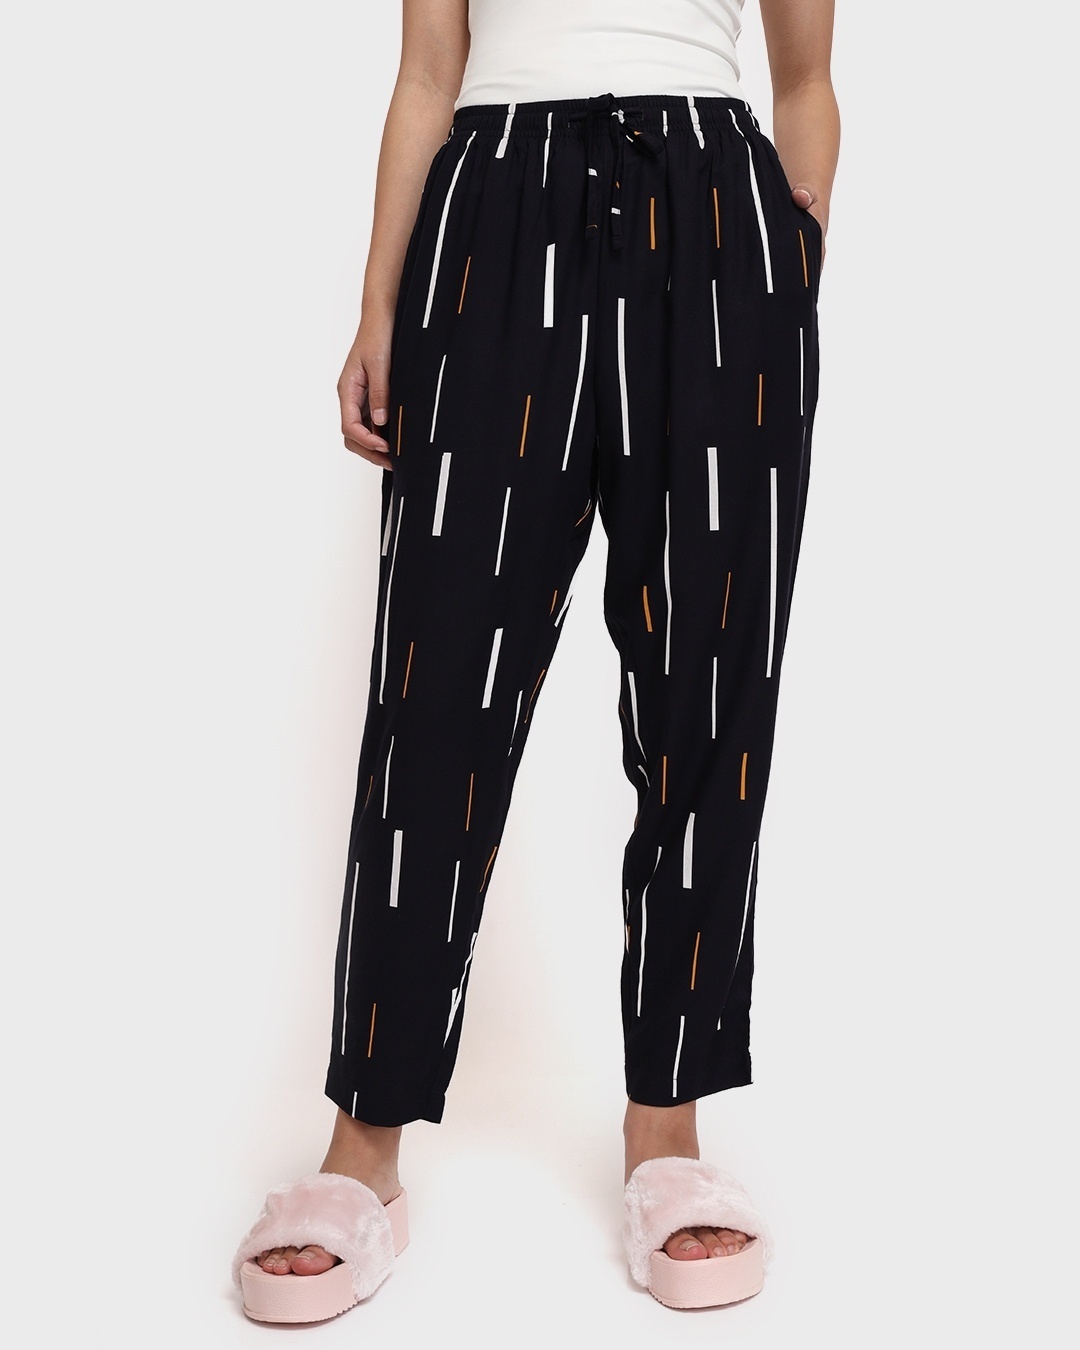 Shop Women's Black AOP Carrot Fit Rayon Pyjamas-Front